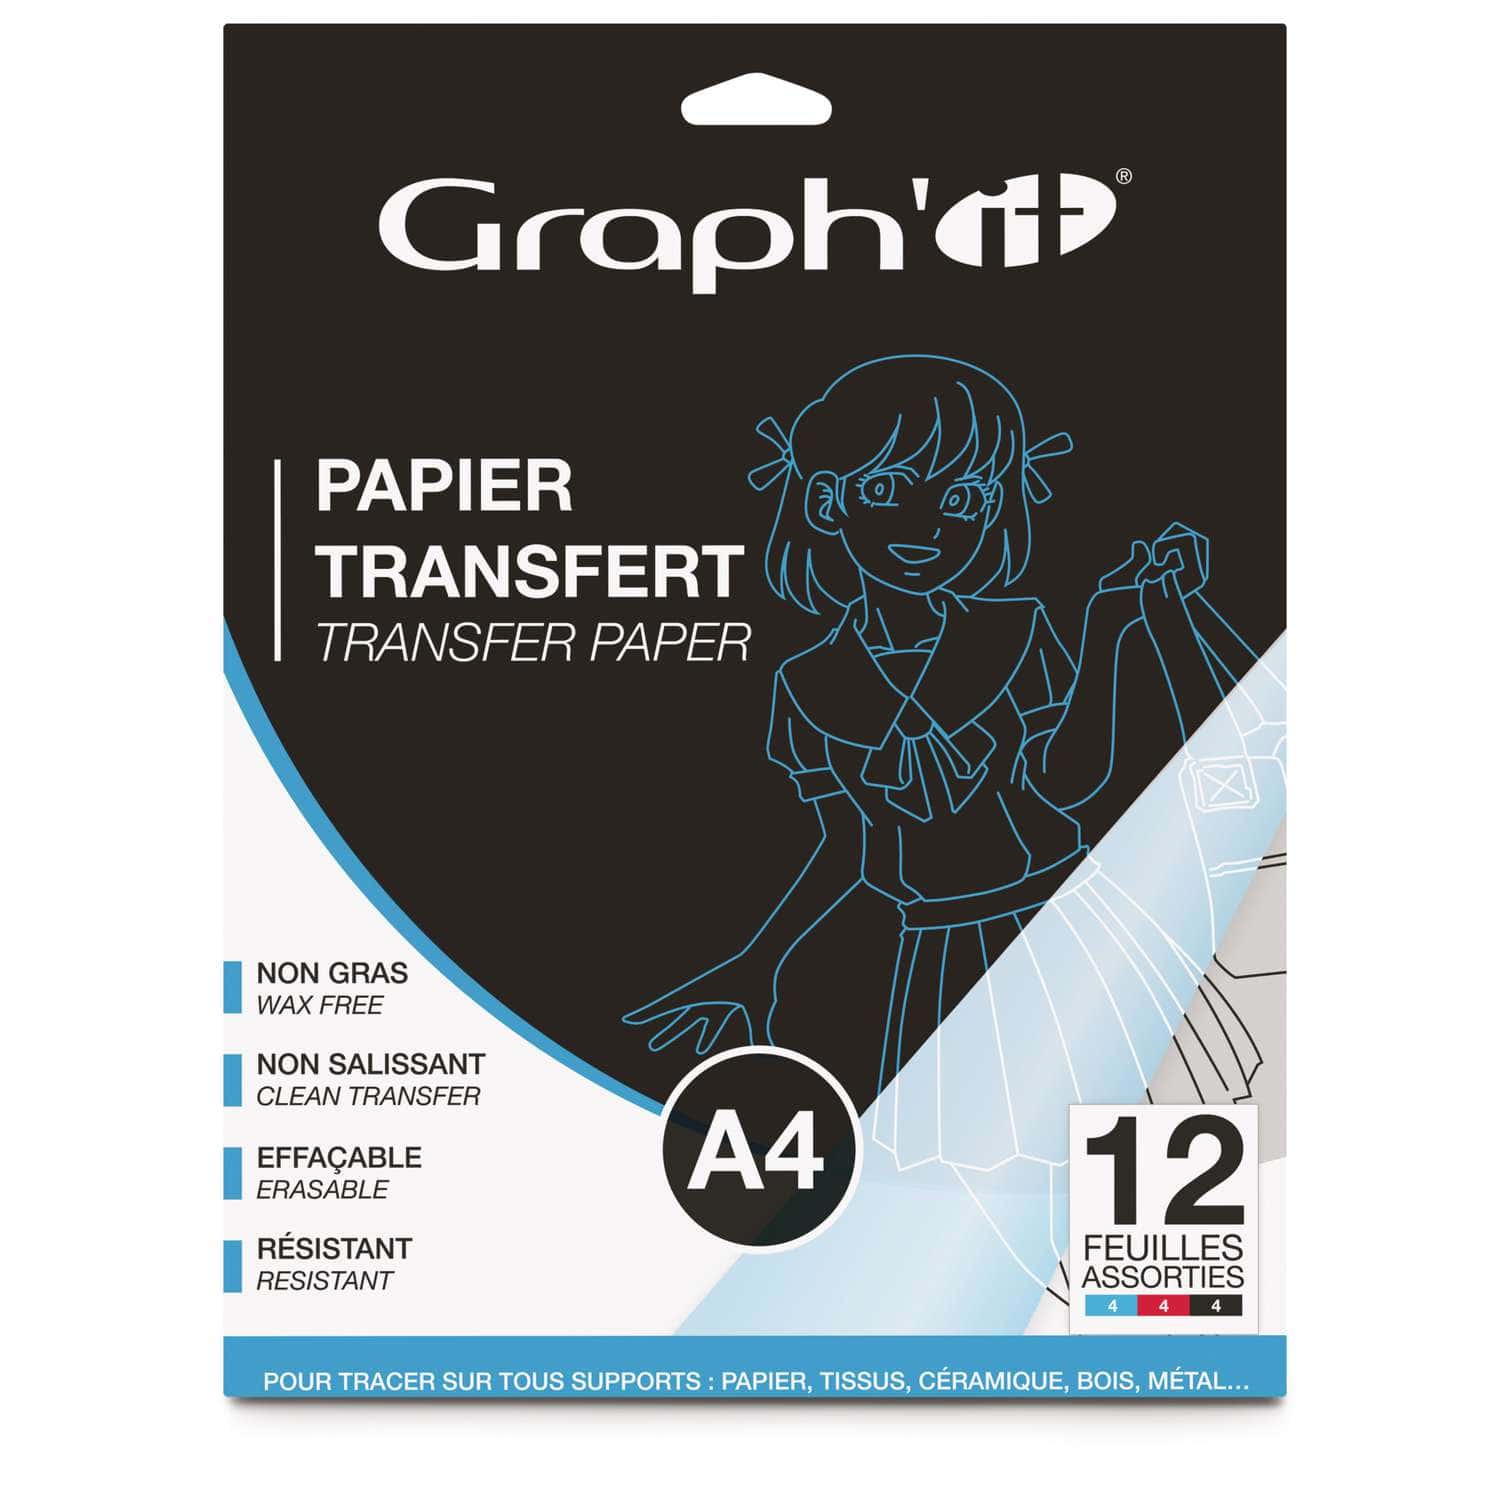 Graphtek - 110 feuilles de papier transfert par